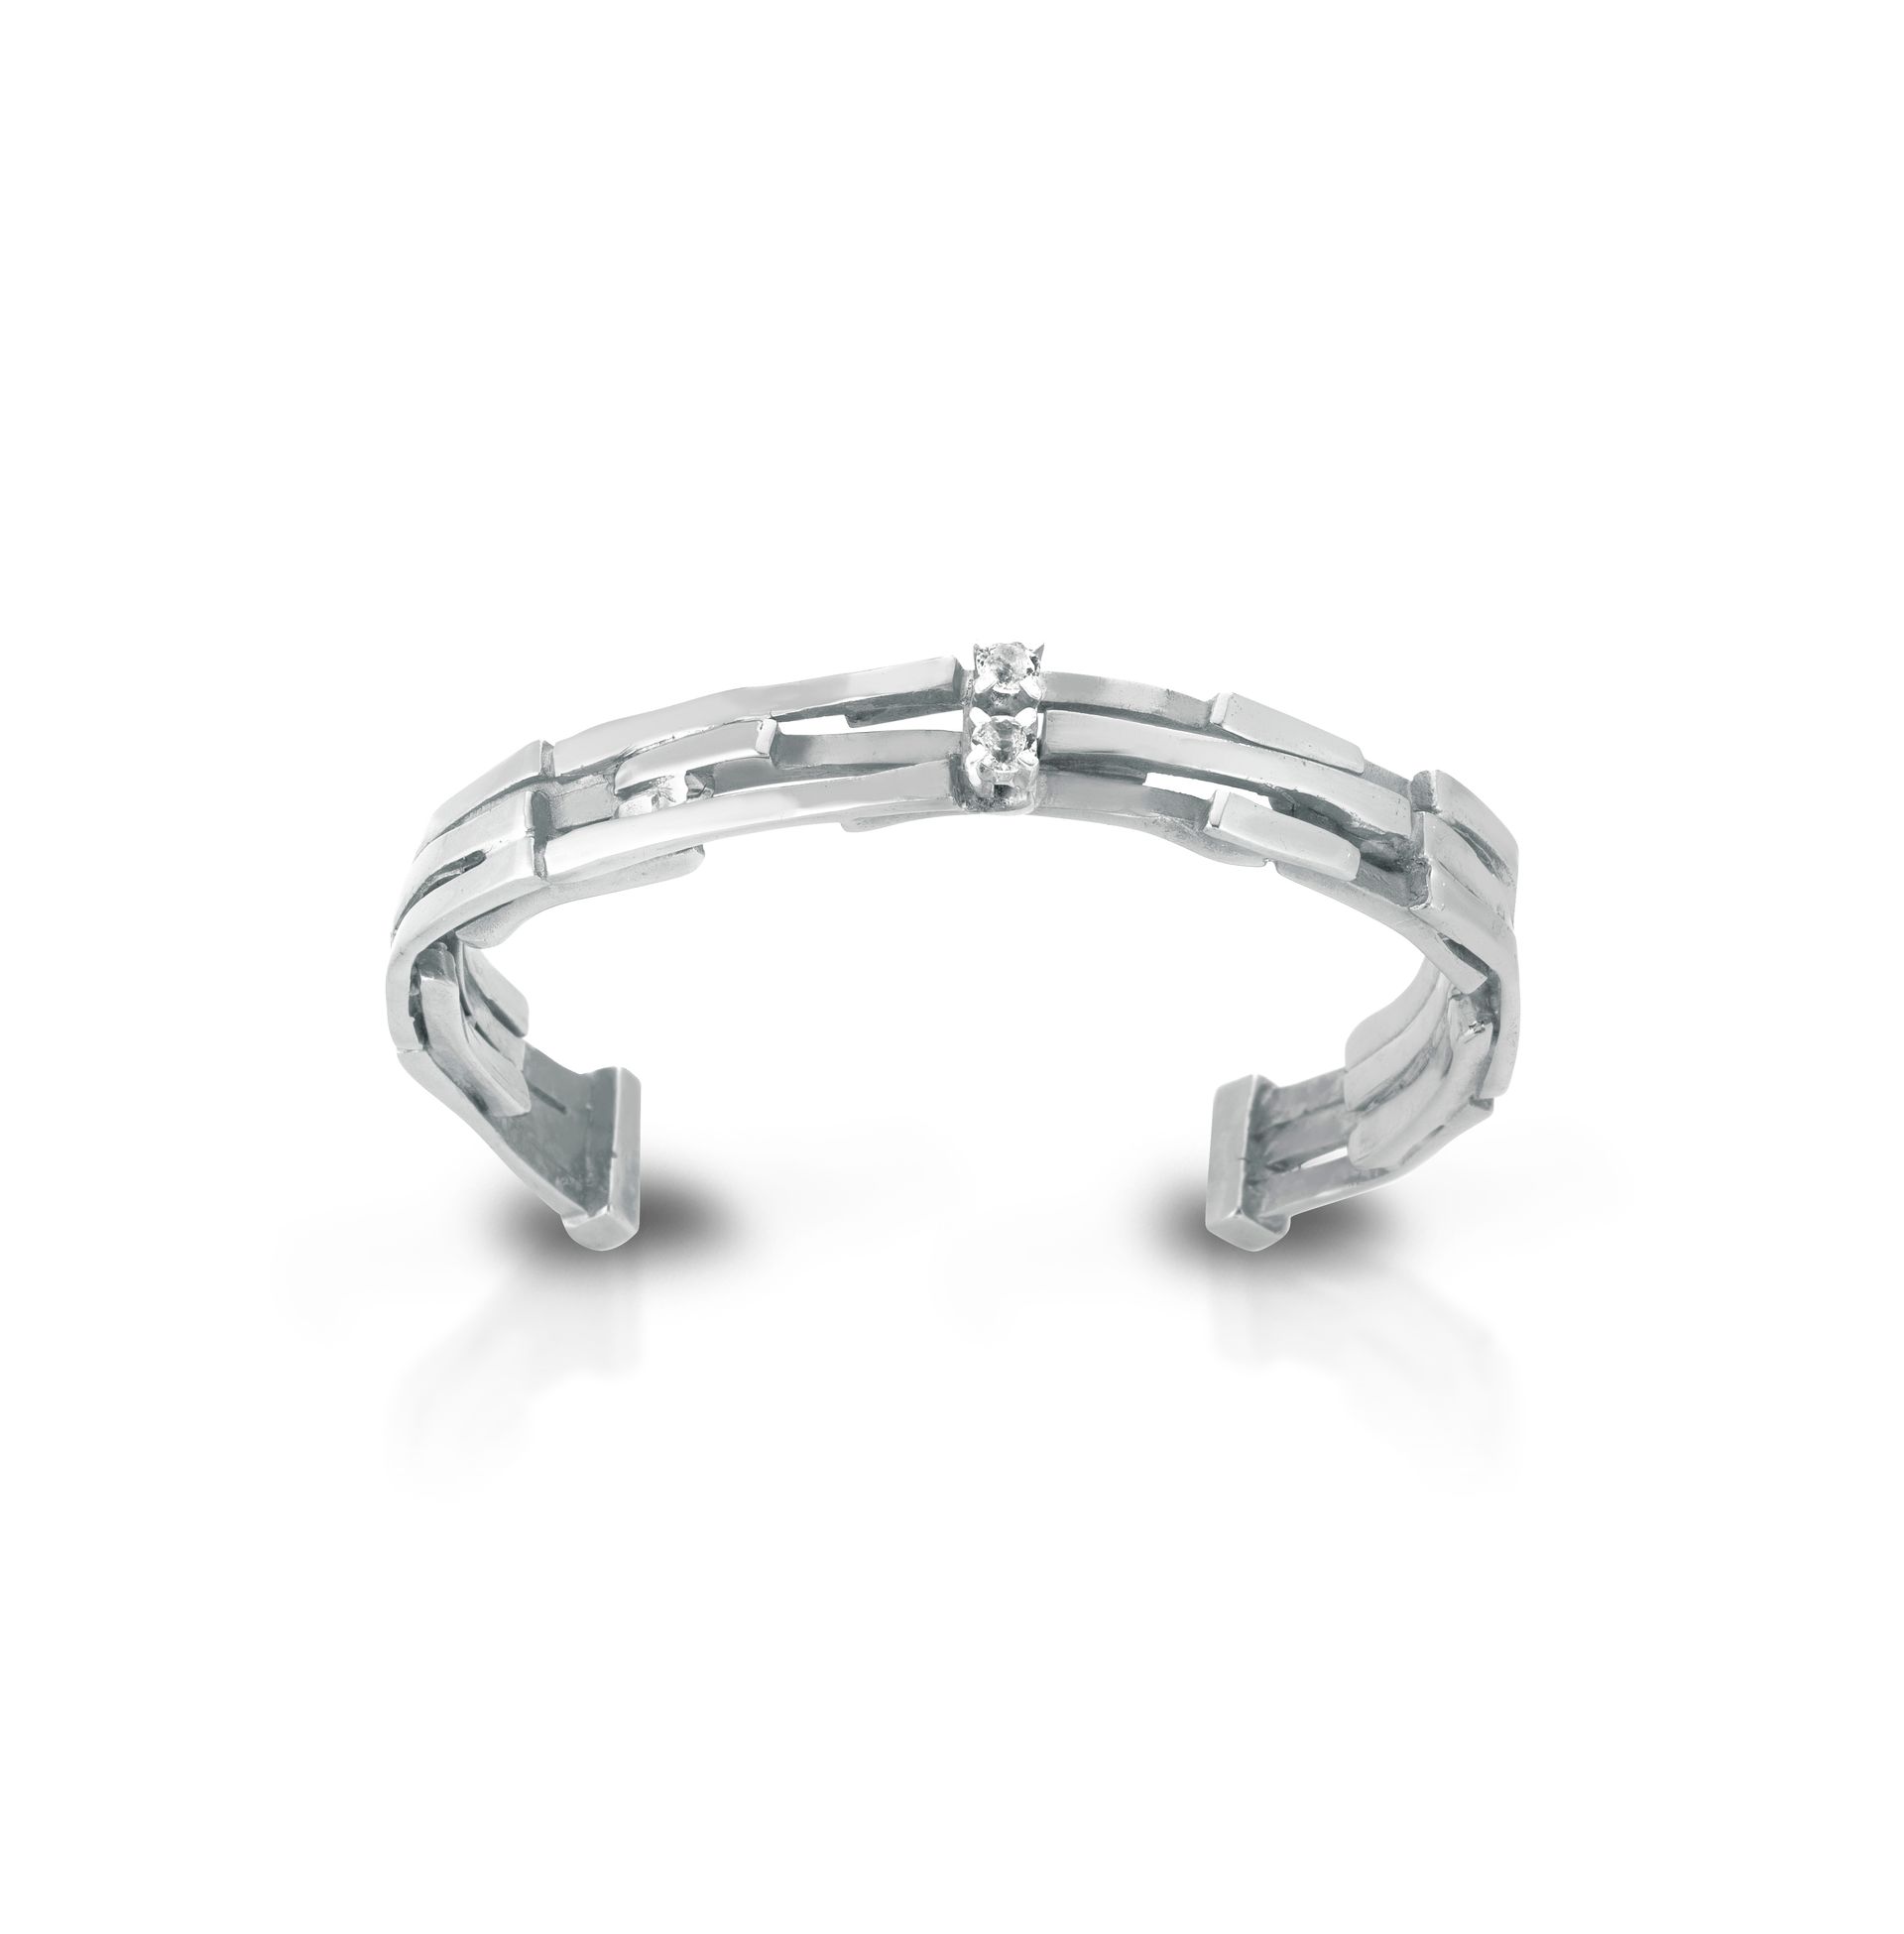 Silver and white topaz bracelet